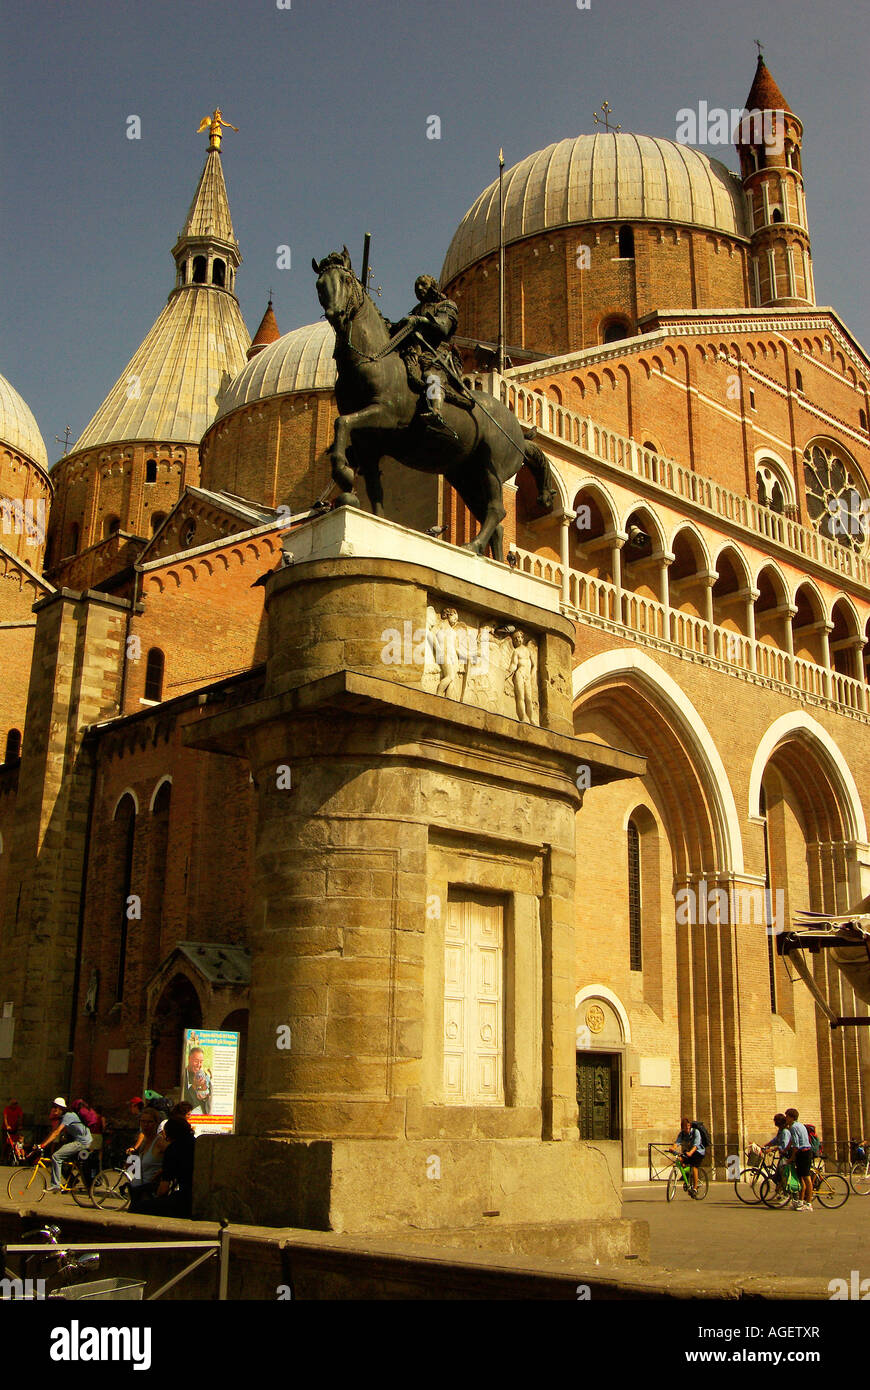 Padua (Padova) Italy, Donatello's monument to Gattamelata in front of the Basilica of Saint Anthony Stock Photo